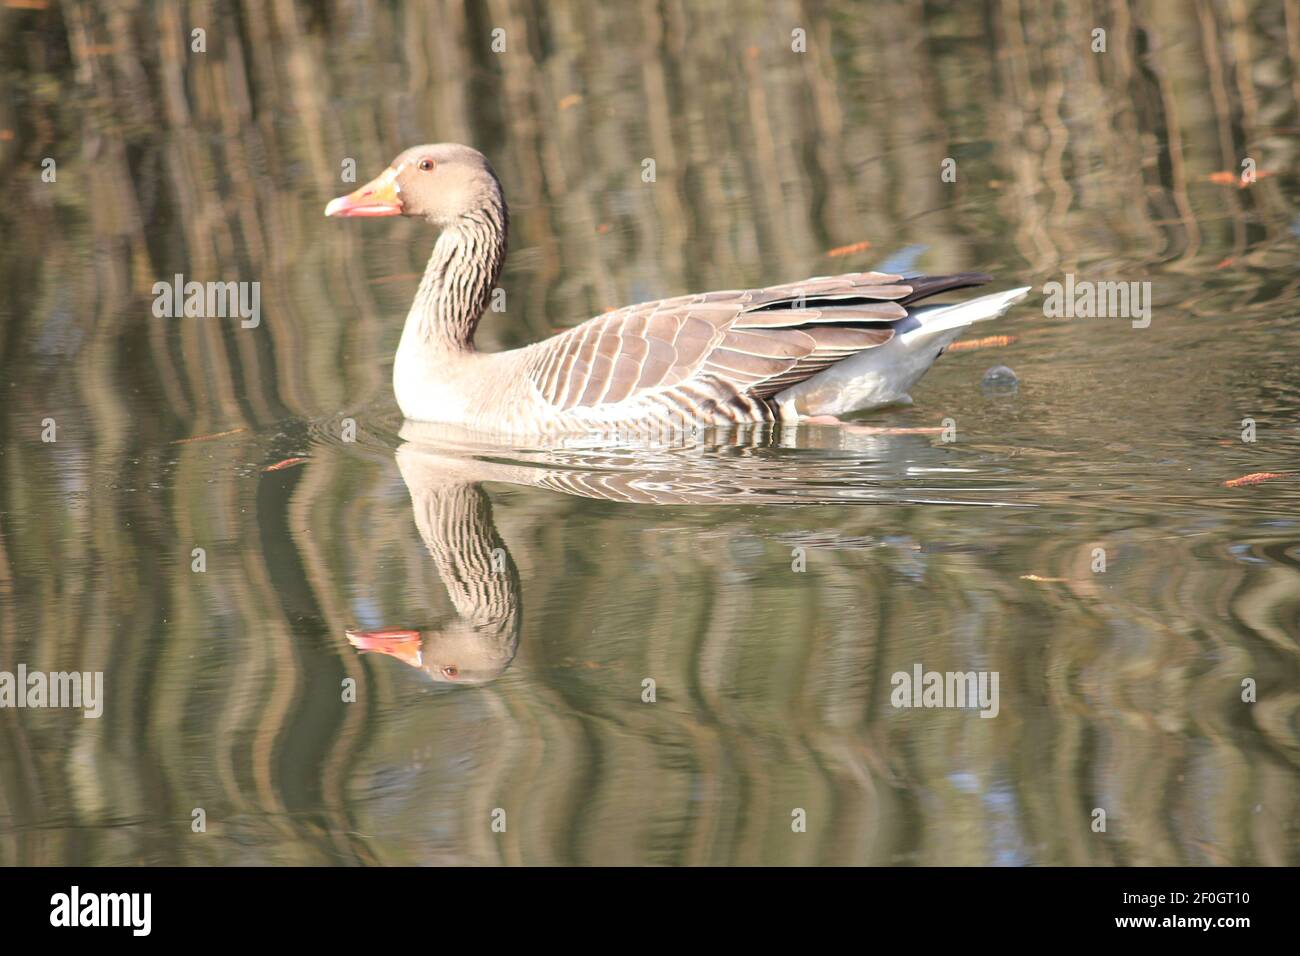 Greylag goose in citypark Staddijk Stock Photo